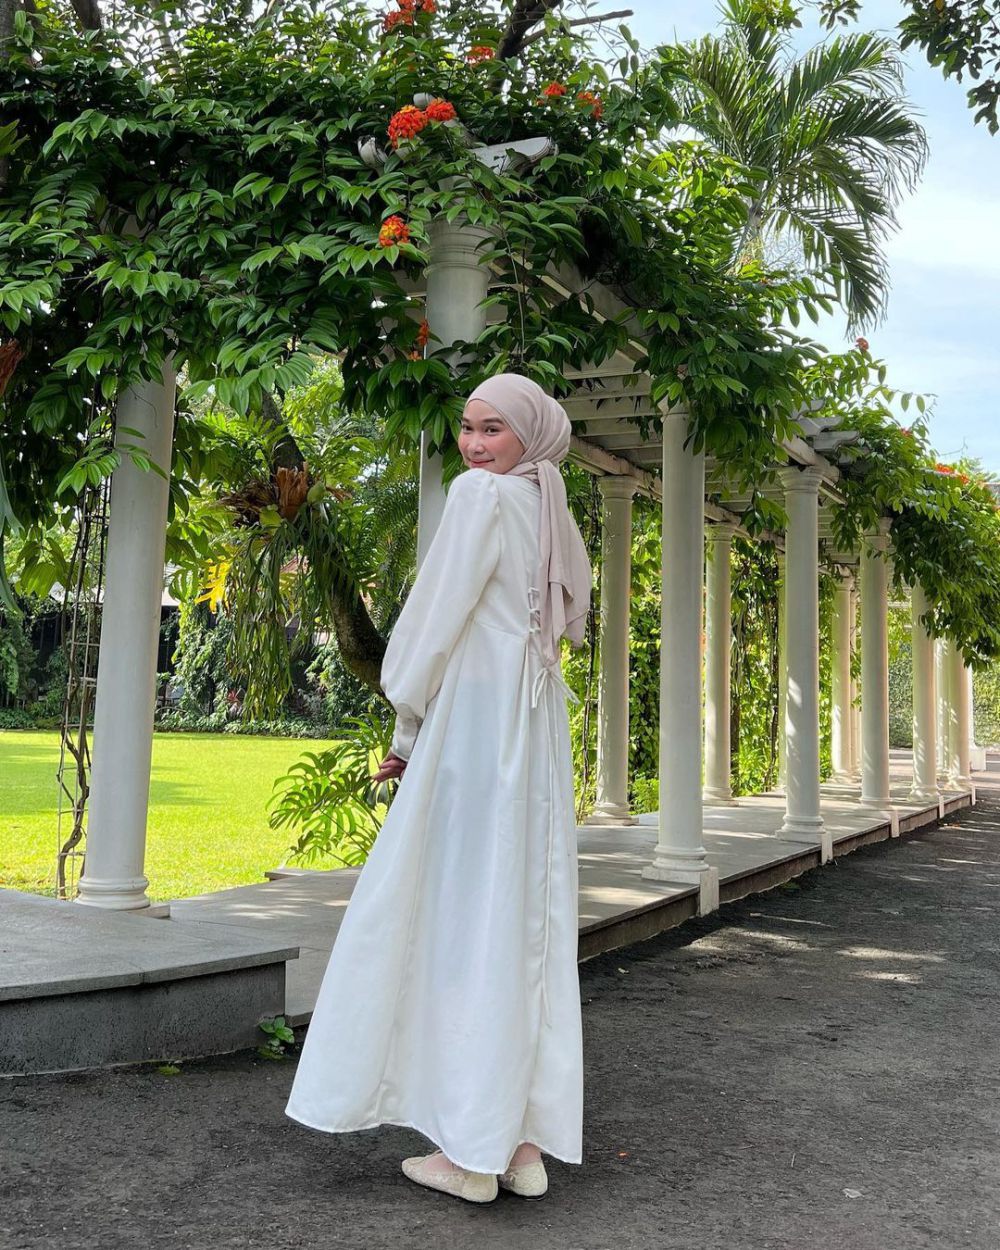 9 Ide Dress Hijab Minimalis ala Astri Ratnasari buat Piknik di Taman